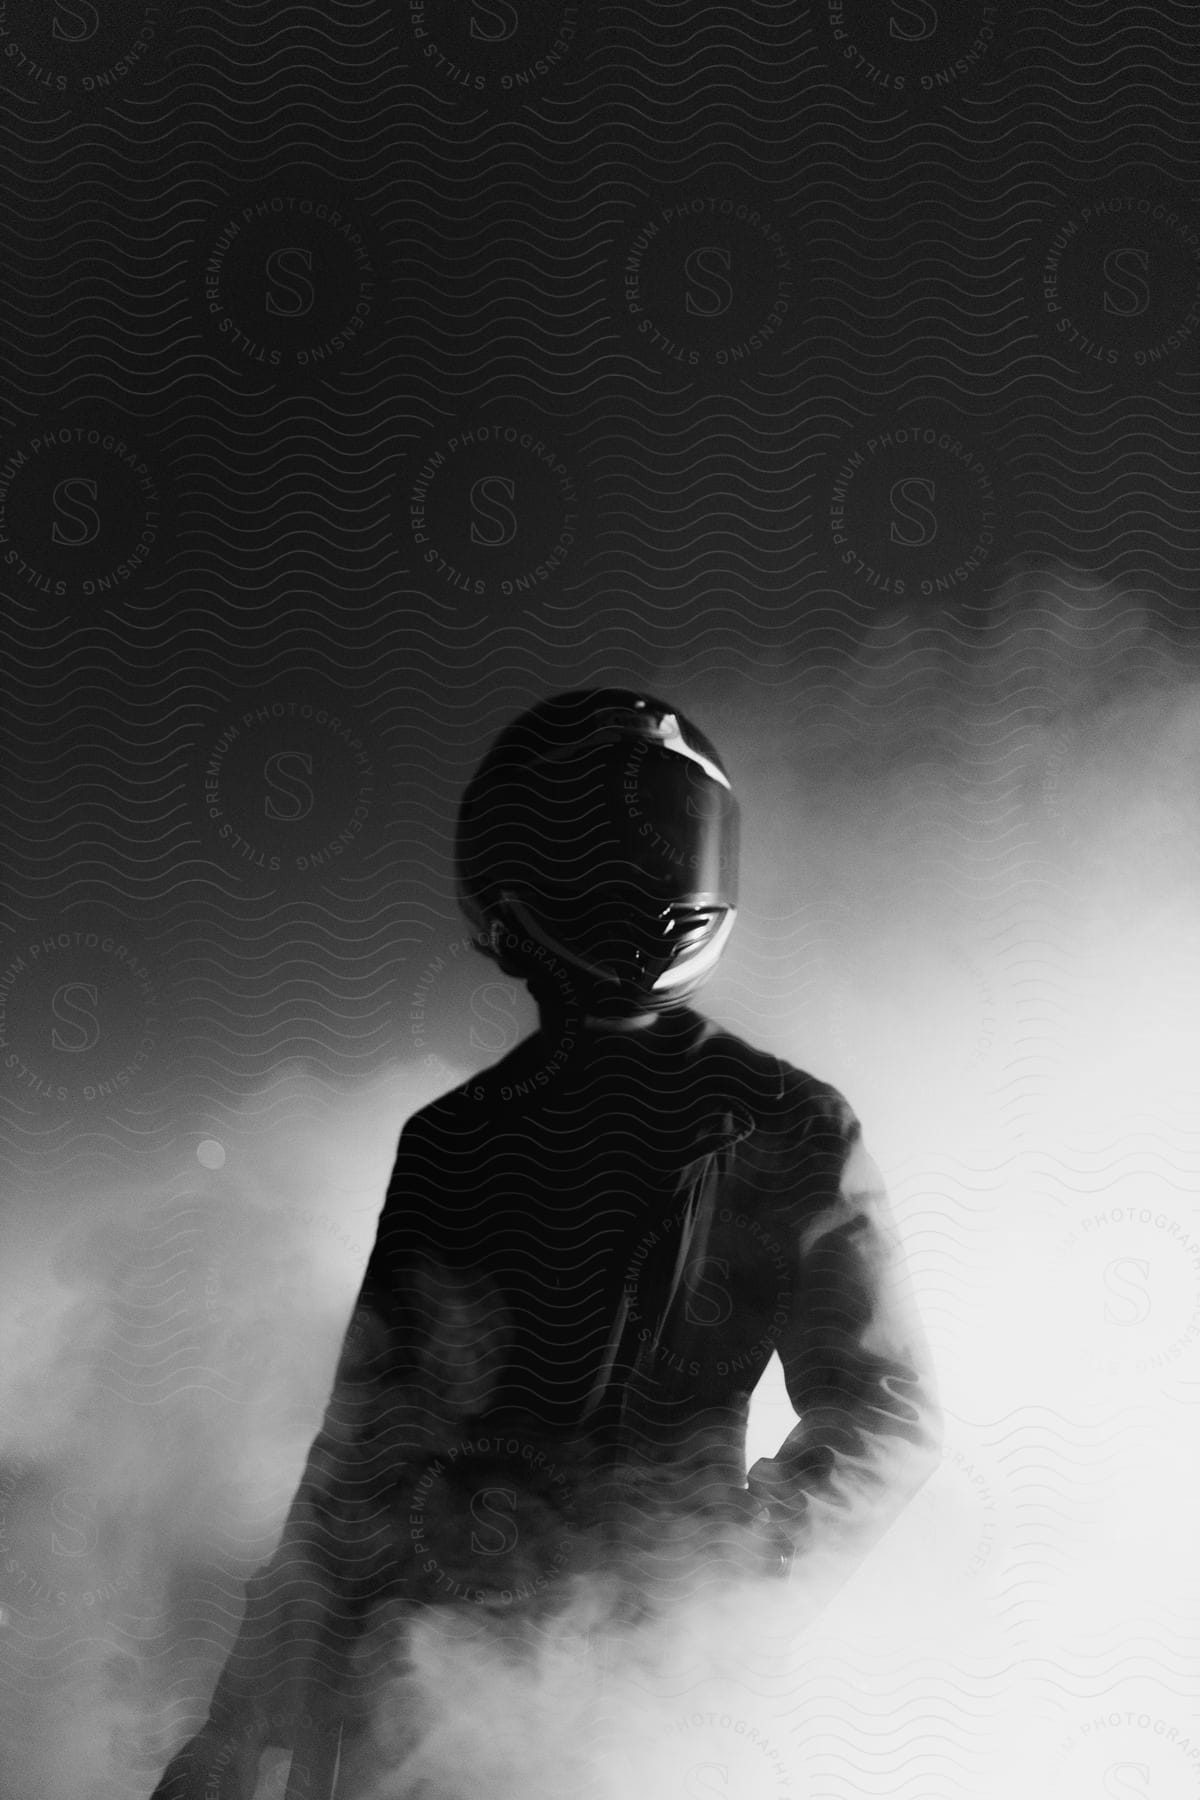 Person wearing black helmet stands in smoke